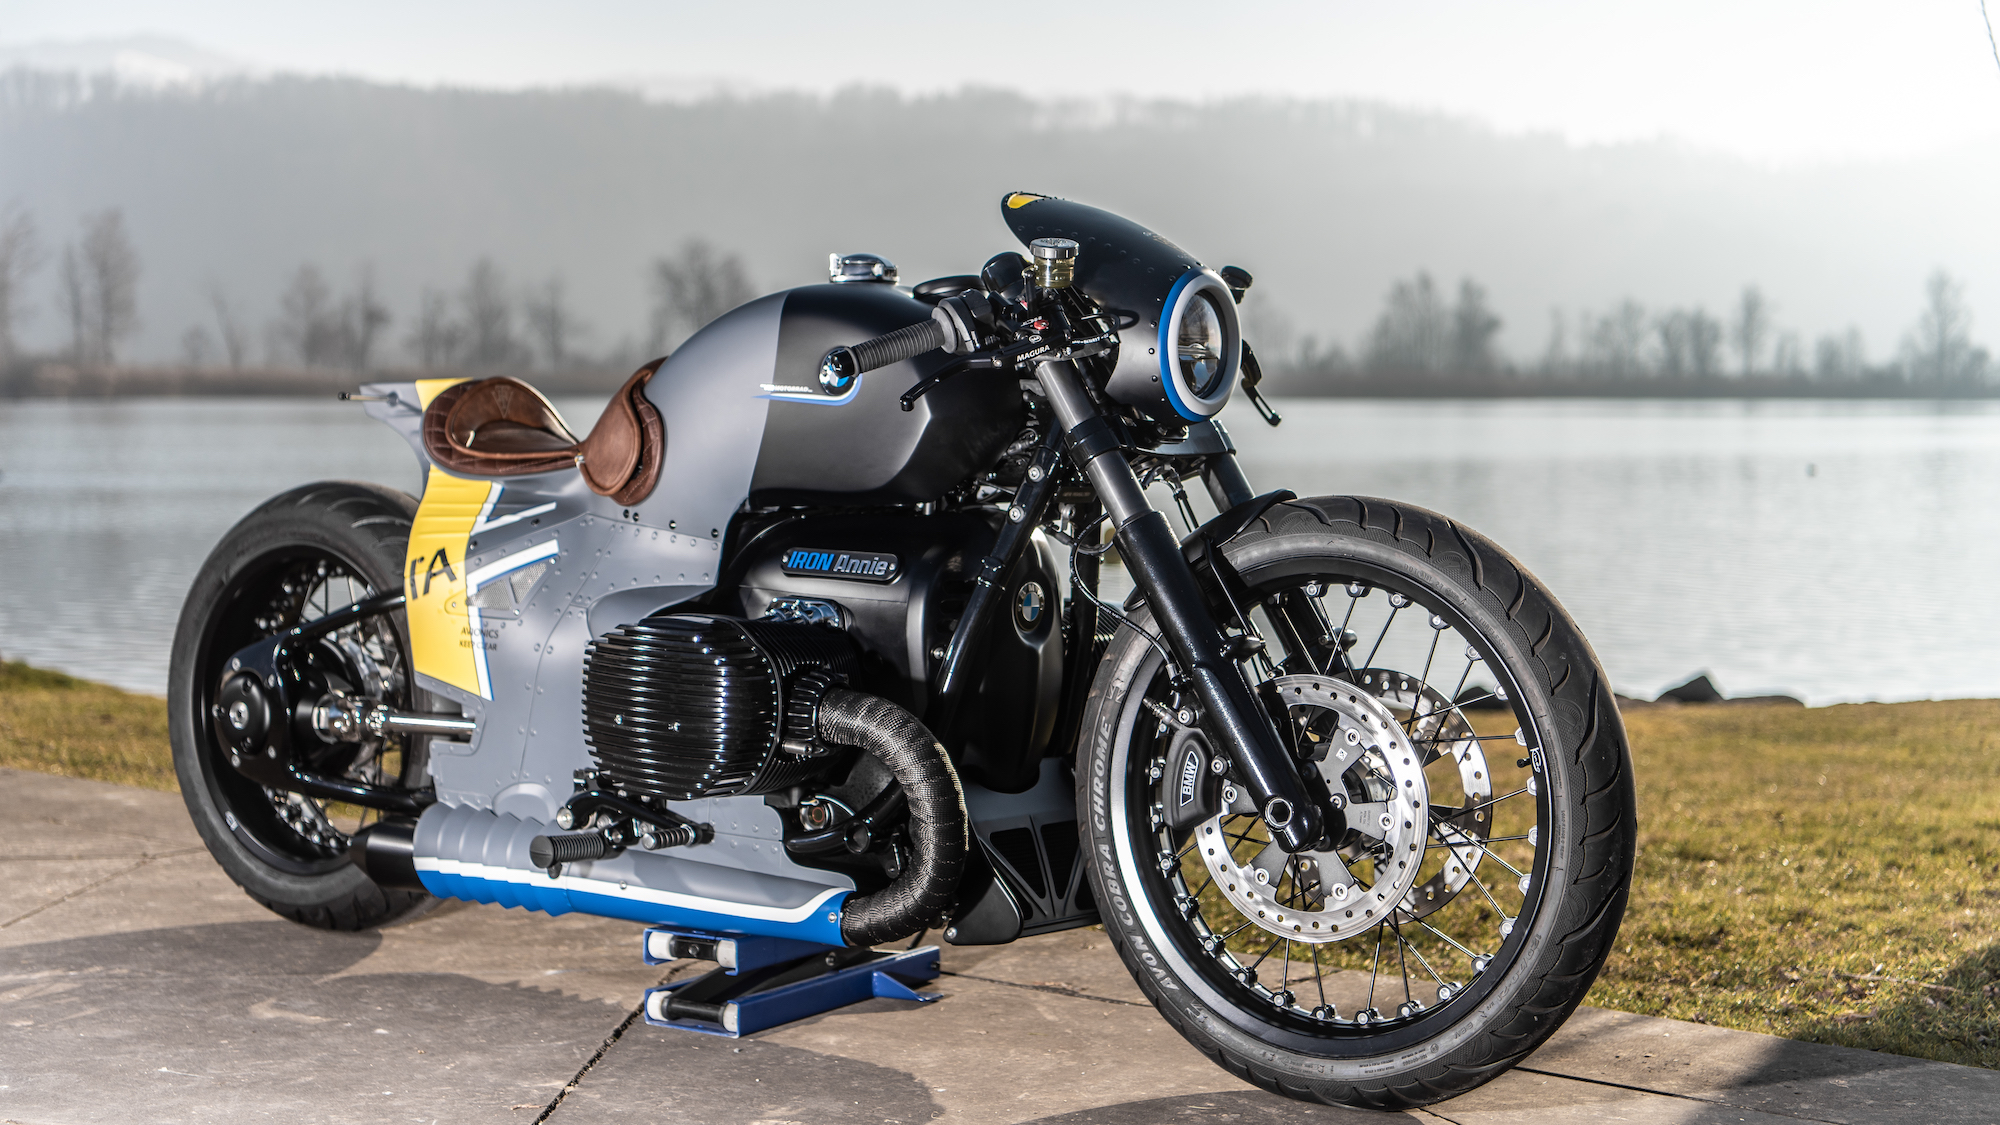 The R 18 "Iron Annie" Custom Bike from Switzerland. Media sourced from BMW.